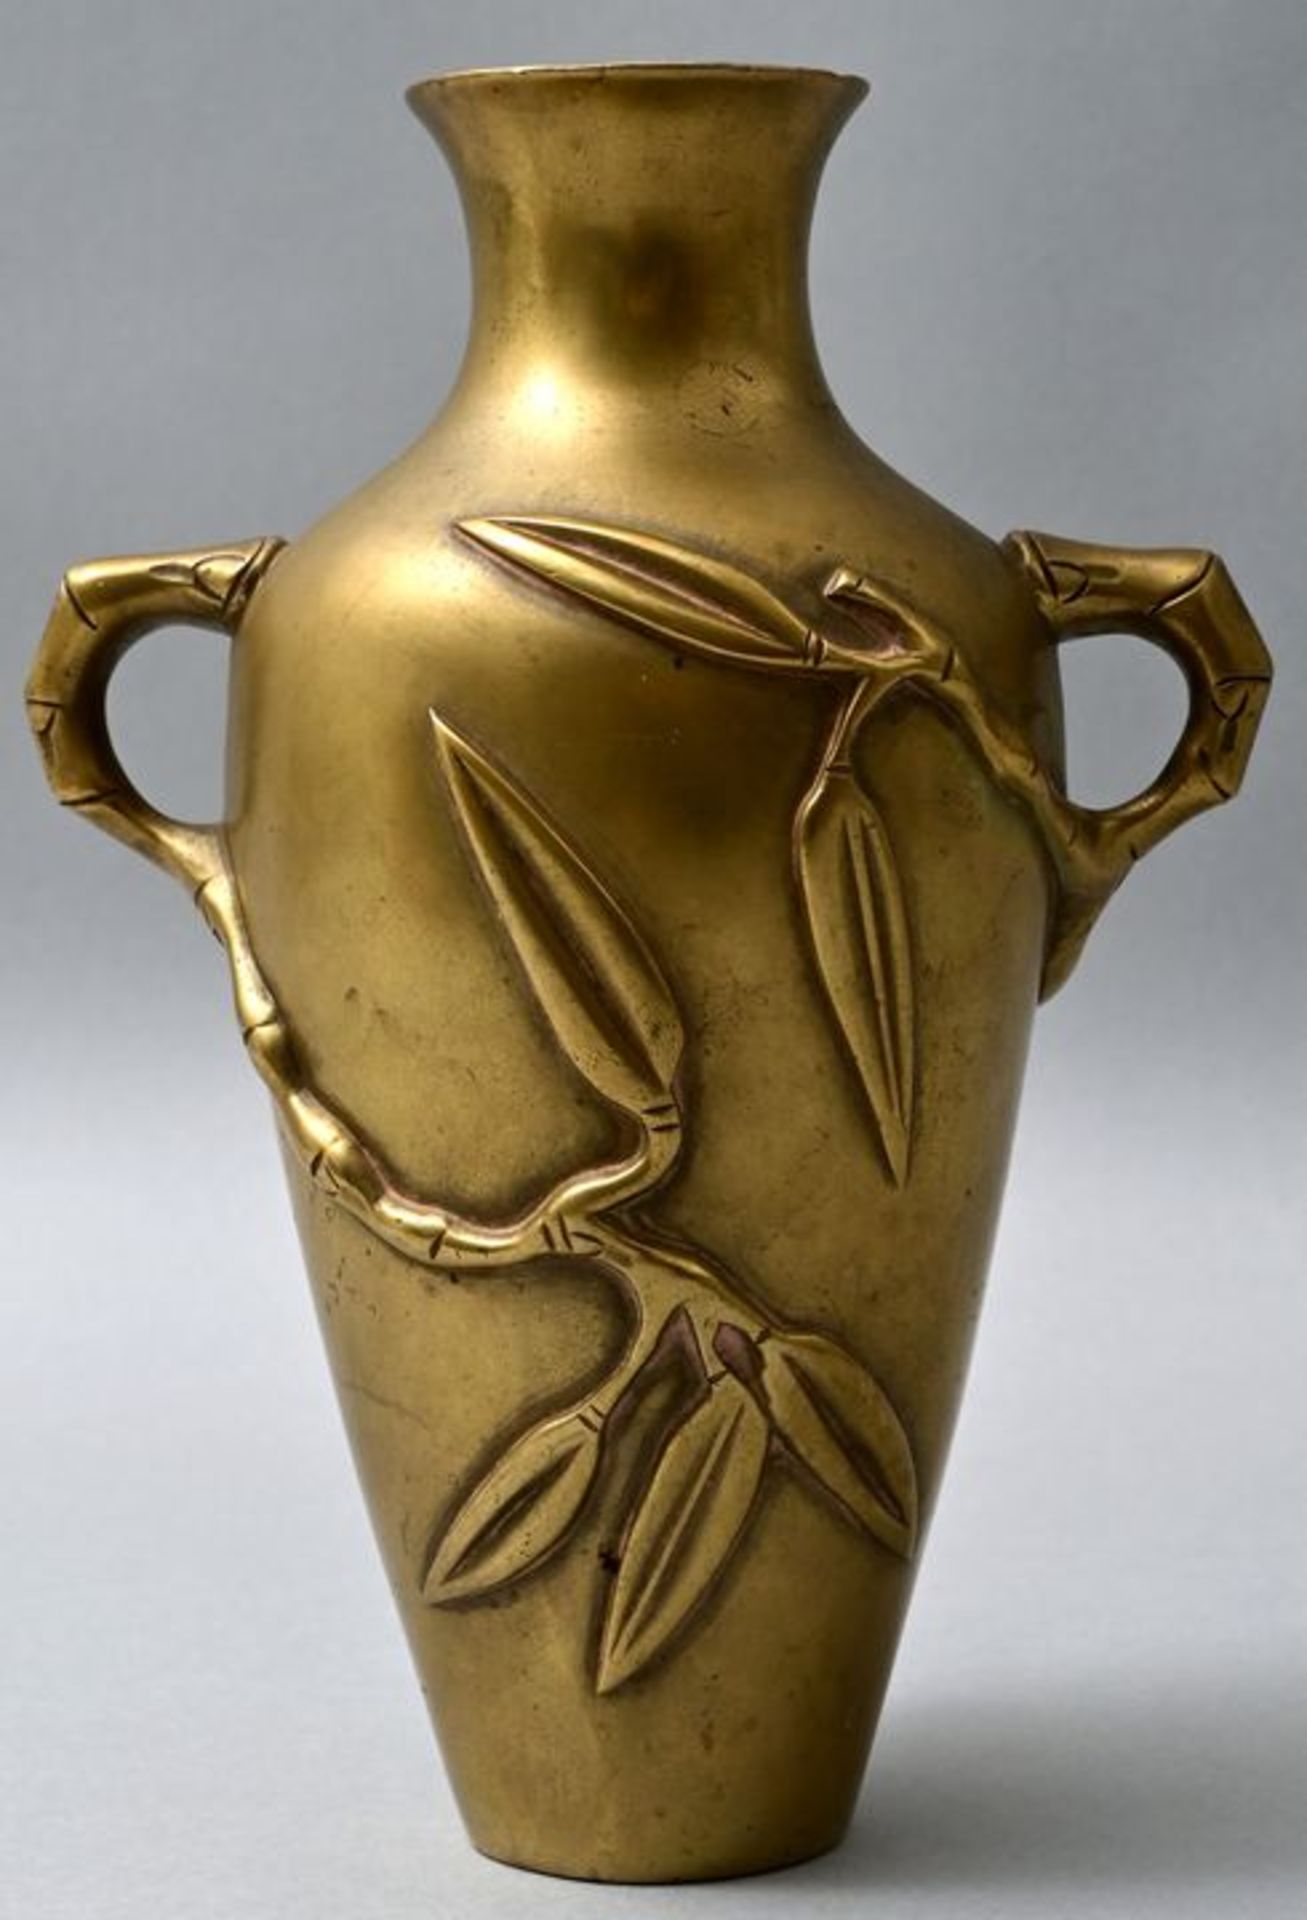 Messingvase / brass vase